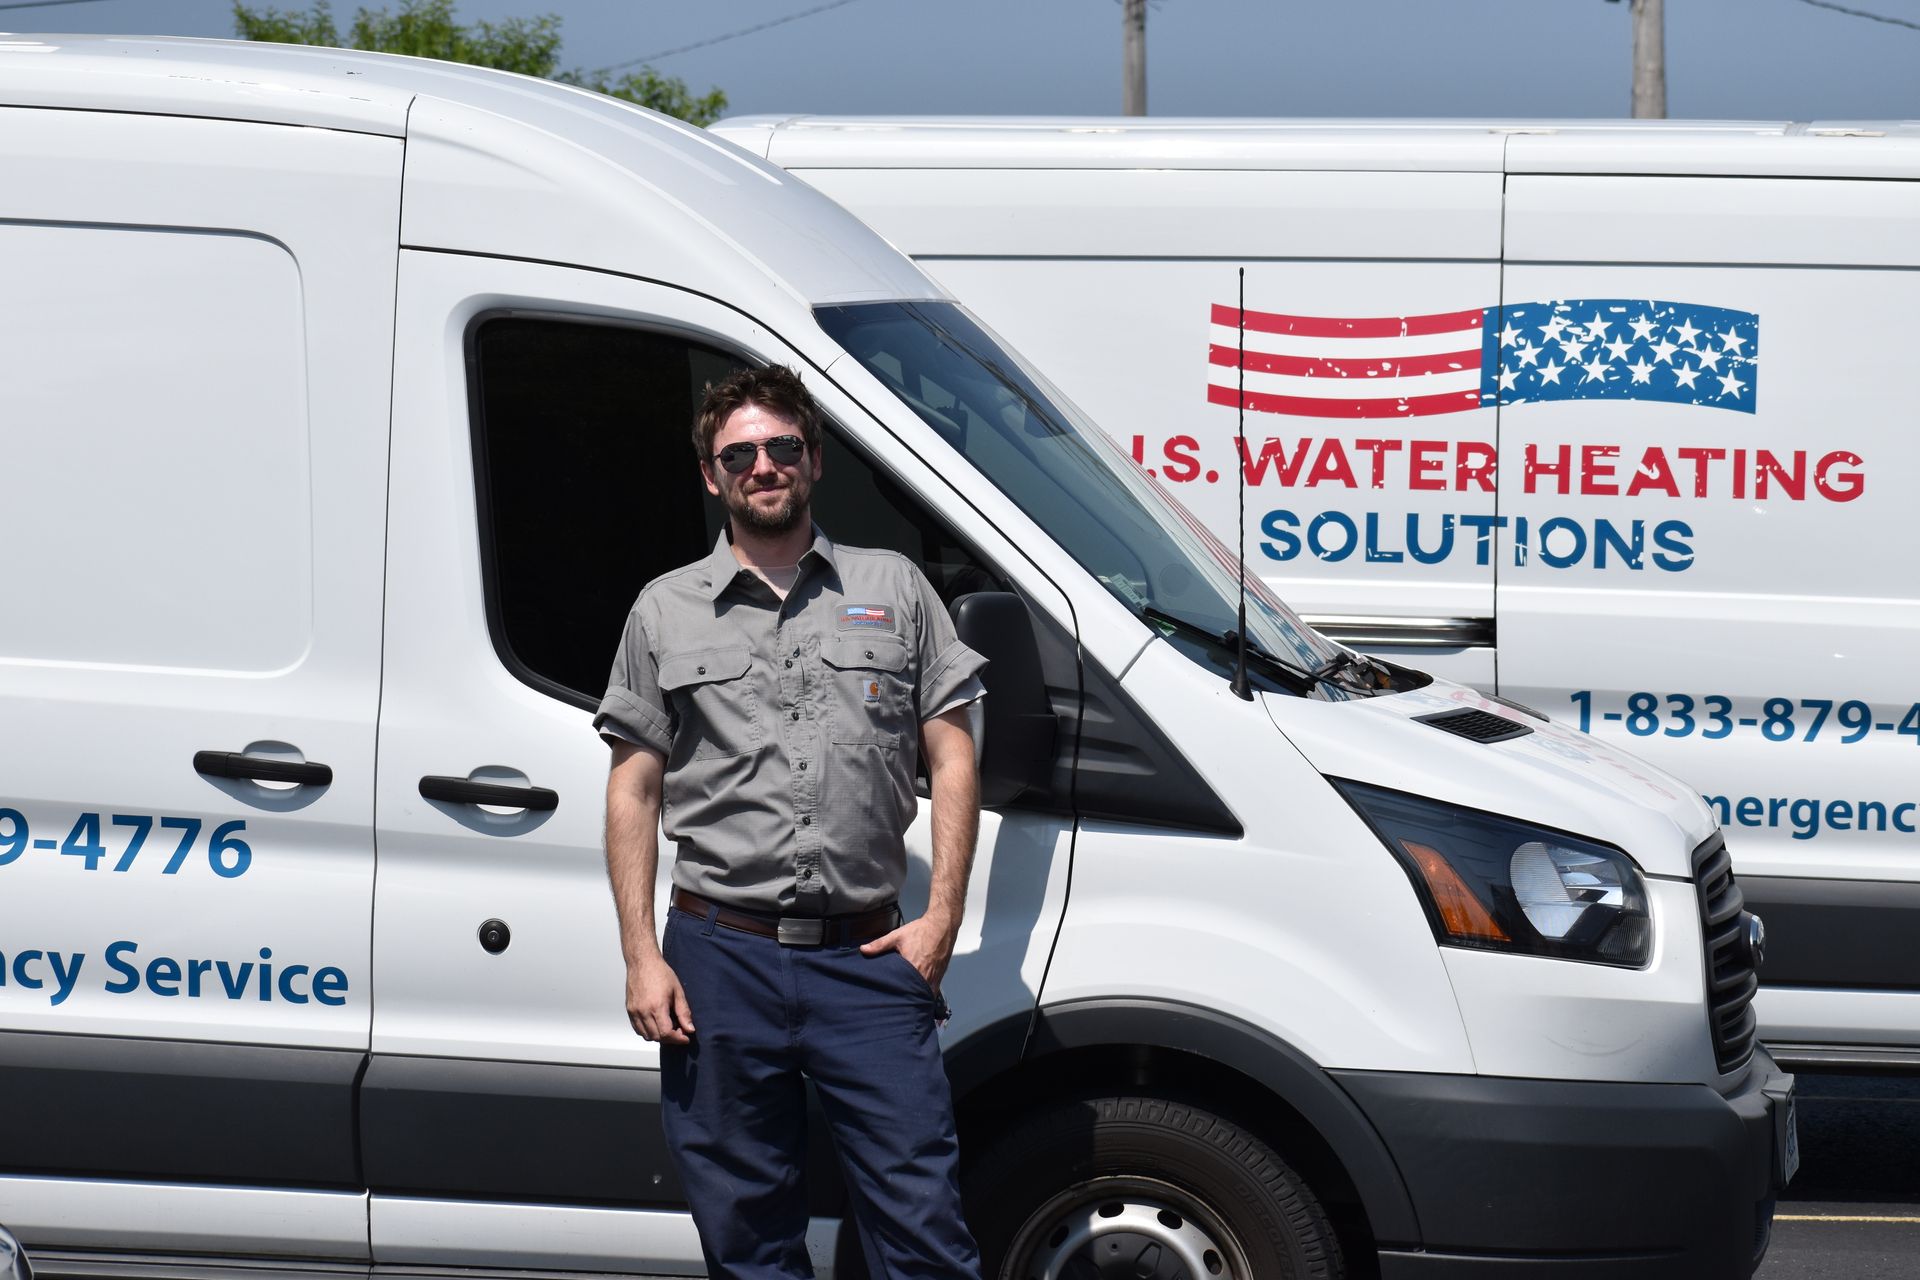 water heater repair technician standing next to his truck